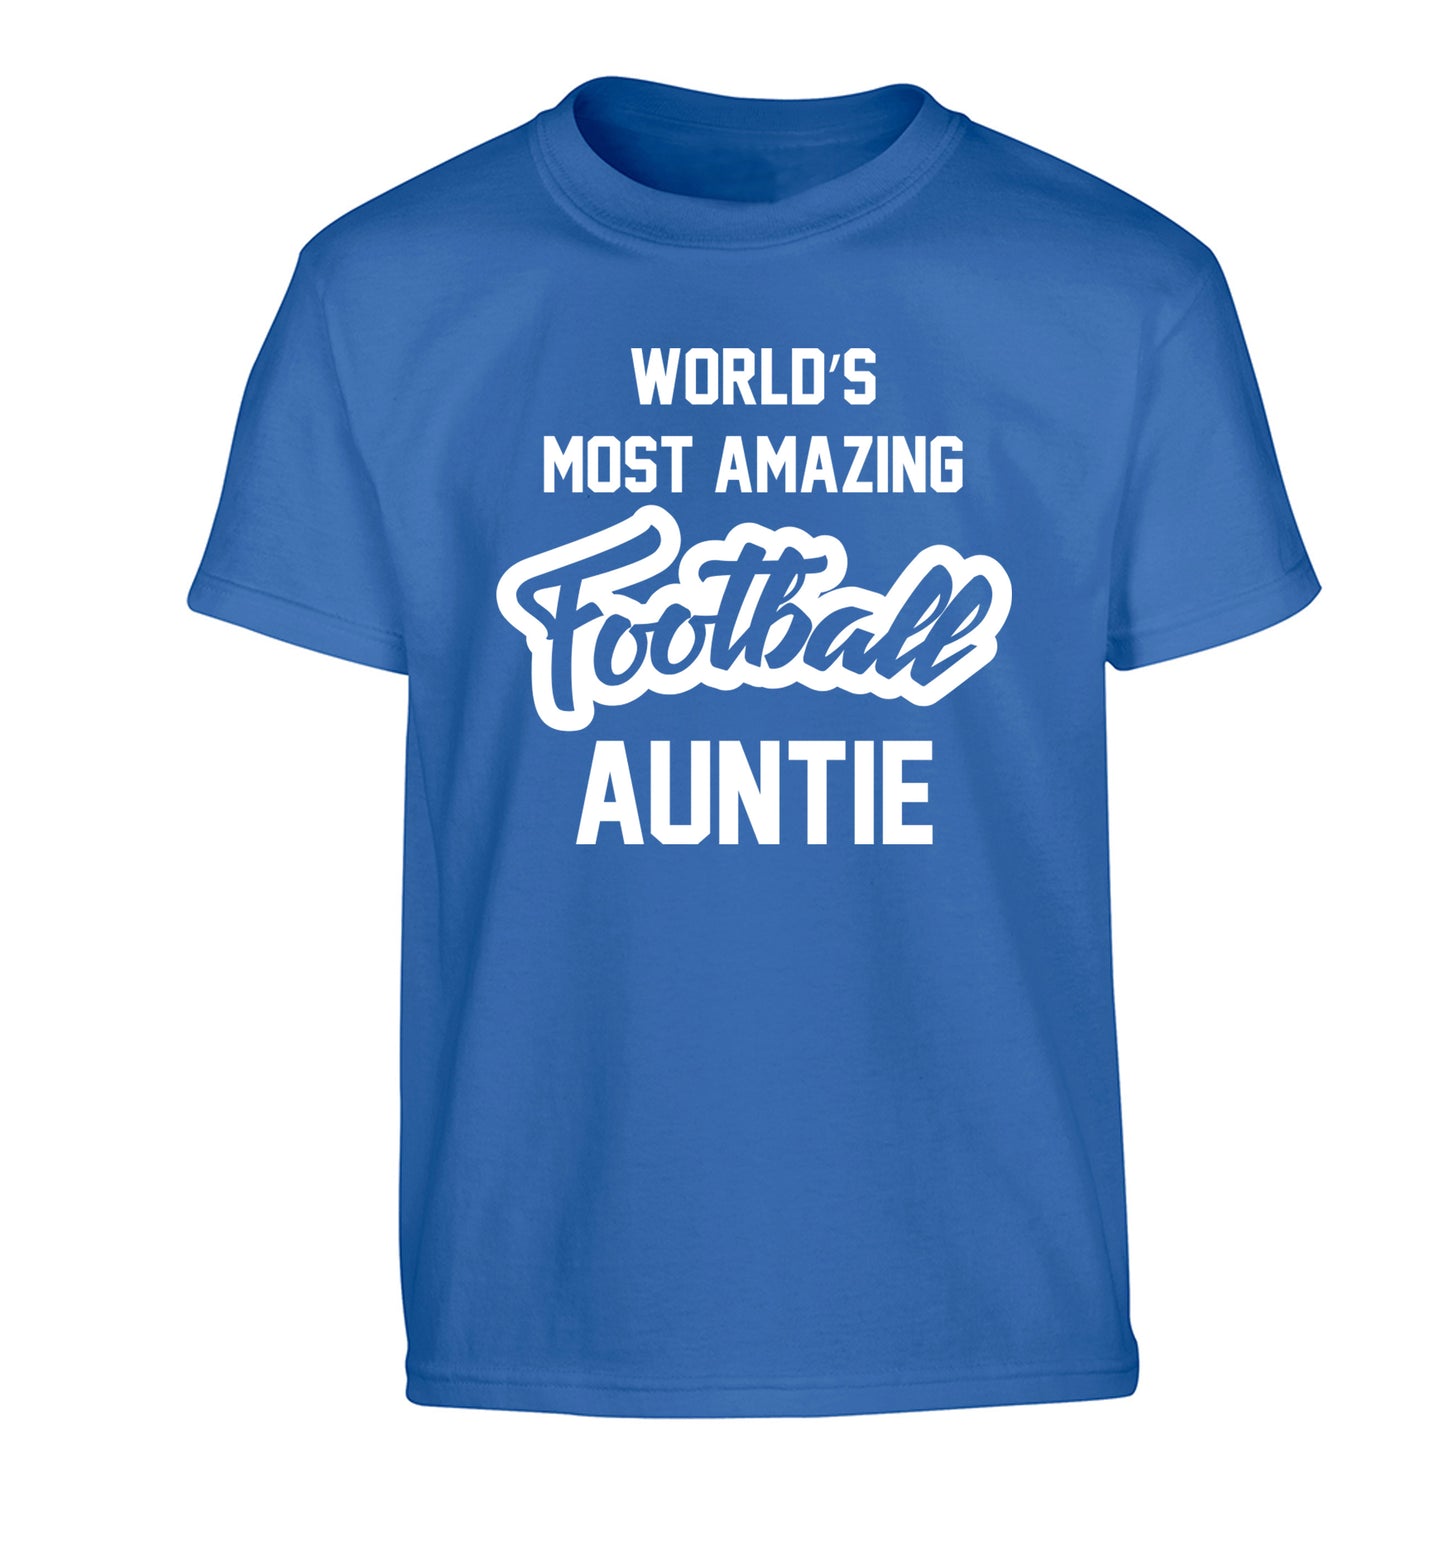 Worlds most amazing football auntie Children's blue Tshirt 12-14 Years